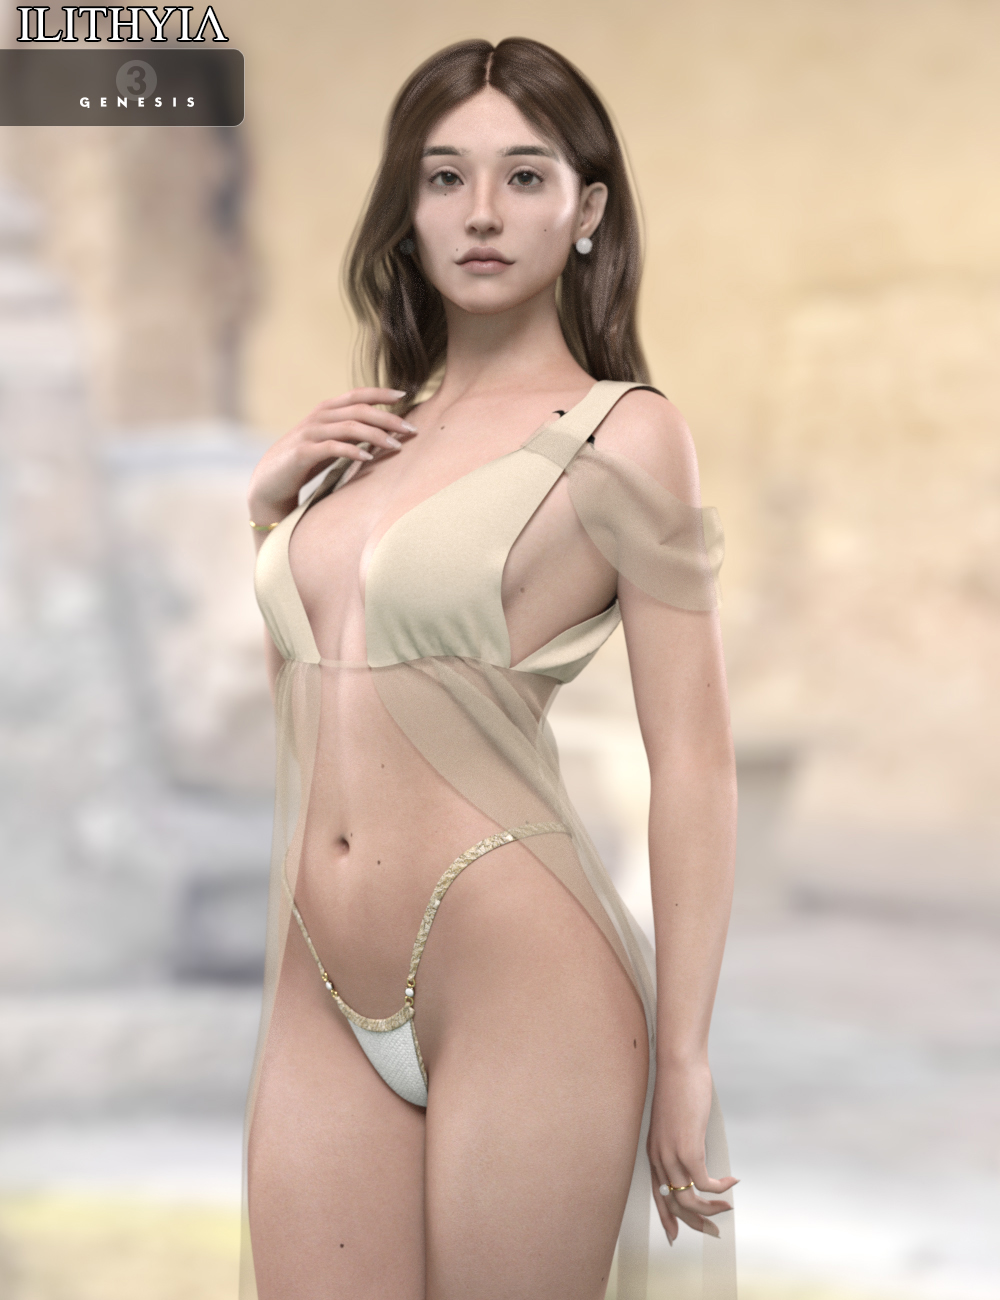 Ilithyia for Genesis 3 Female by: VincentXyooj, 3D Models by Daz 3D